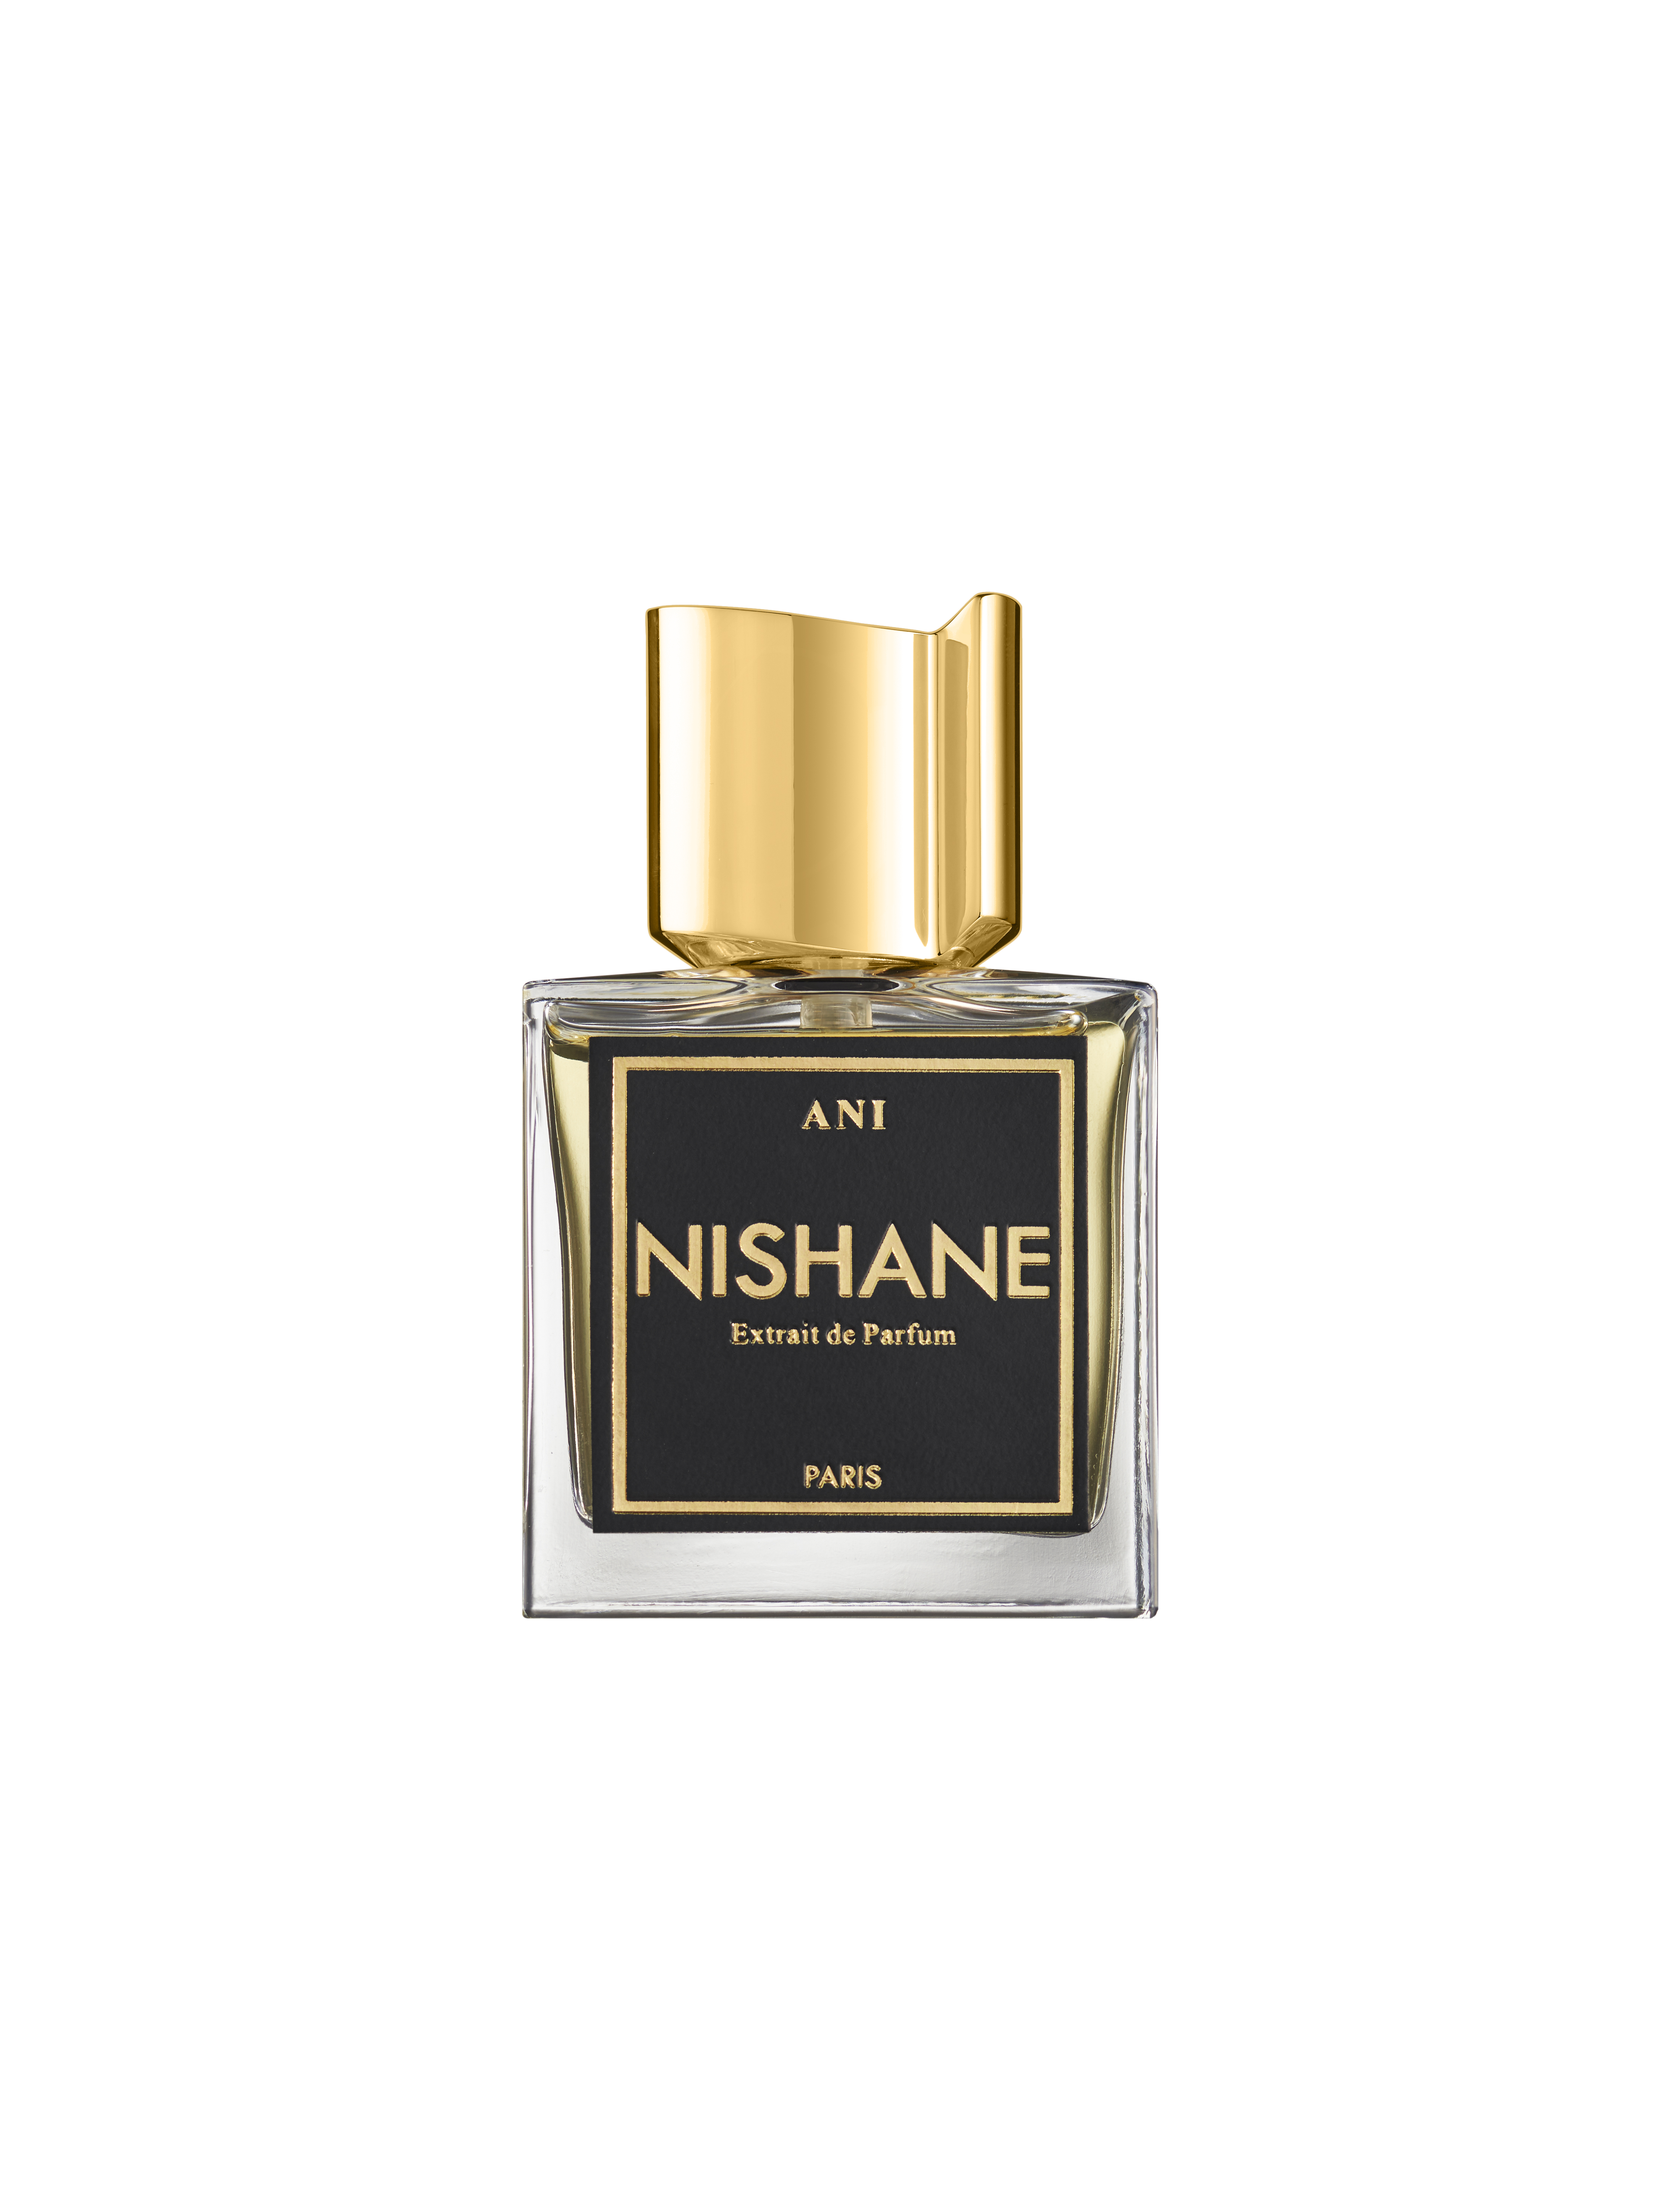 Nishane - Ani - Extrait de Parfum 50 ml